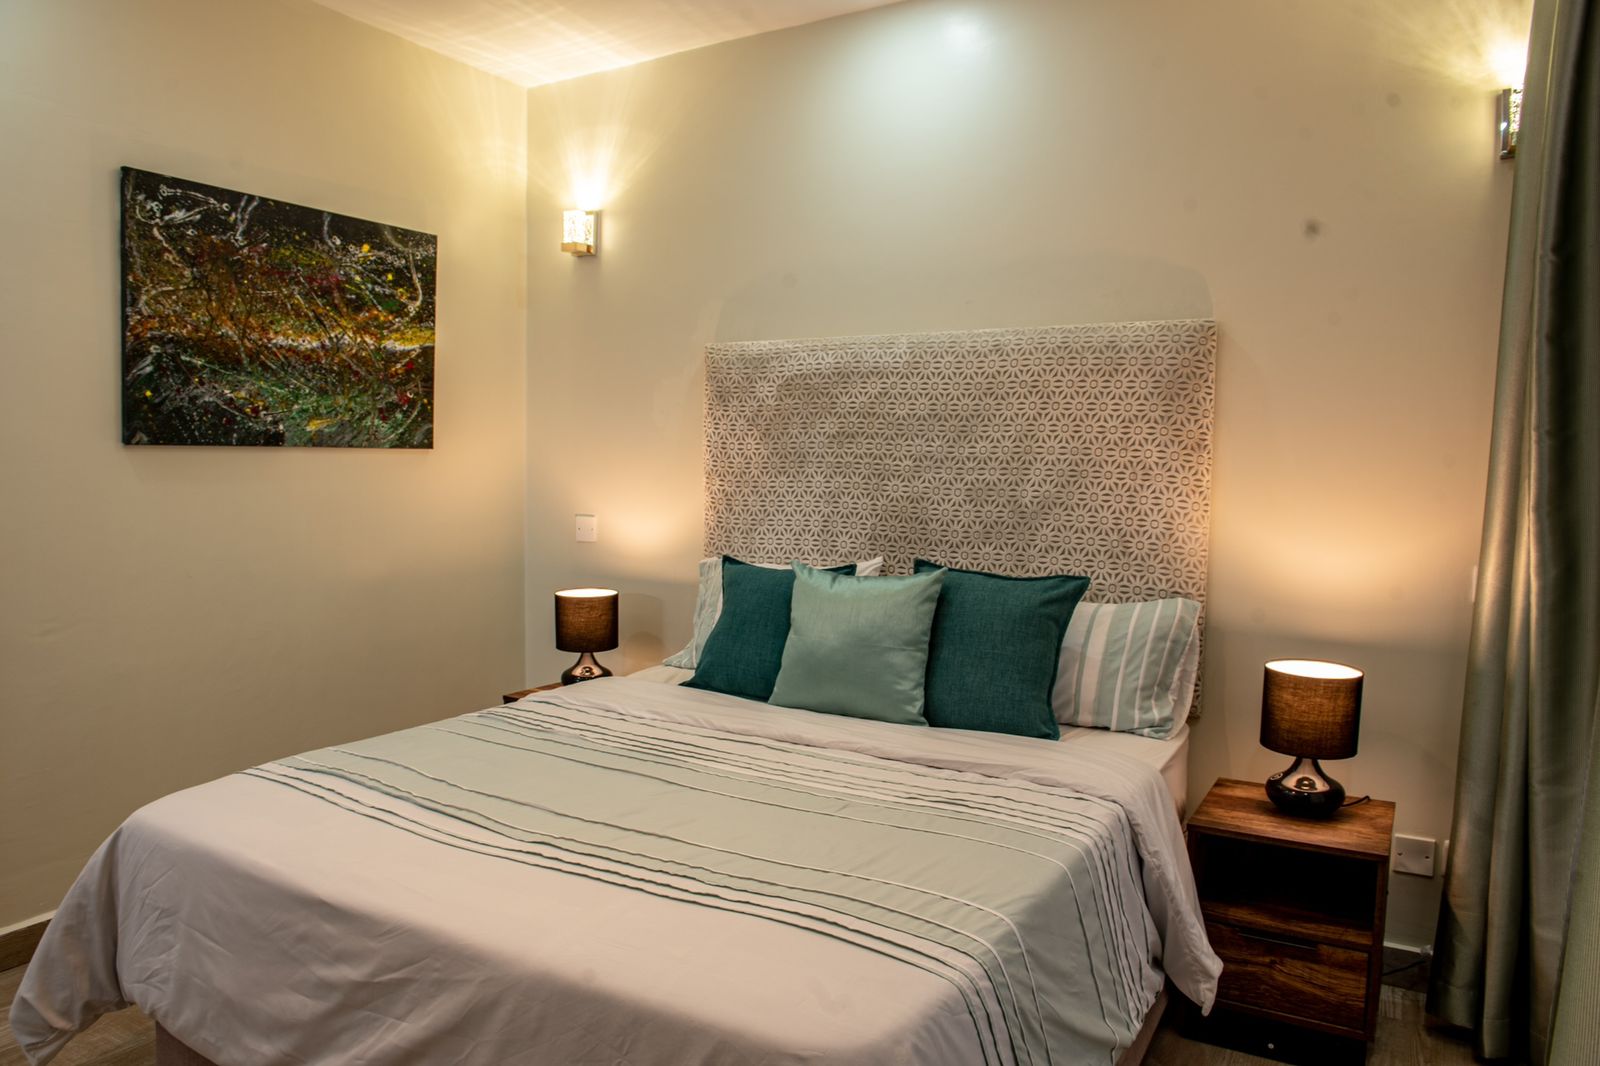 An Elegant Fully Furnished 2 Bedroom Apartments For Rent In Kileleshwa at Ksh180k:Month14